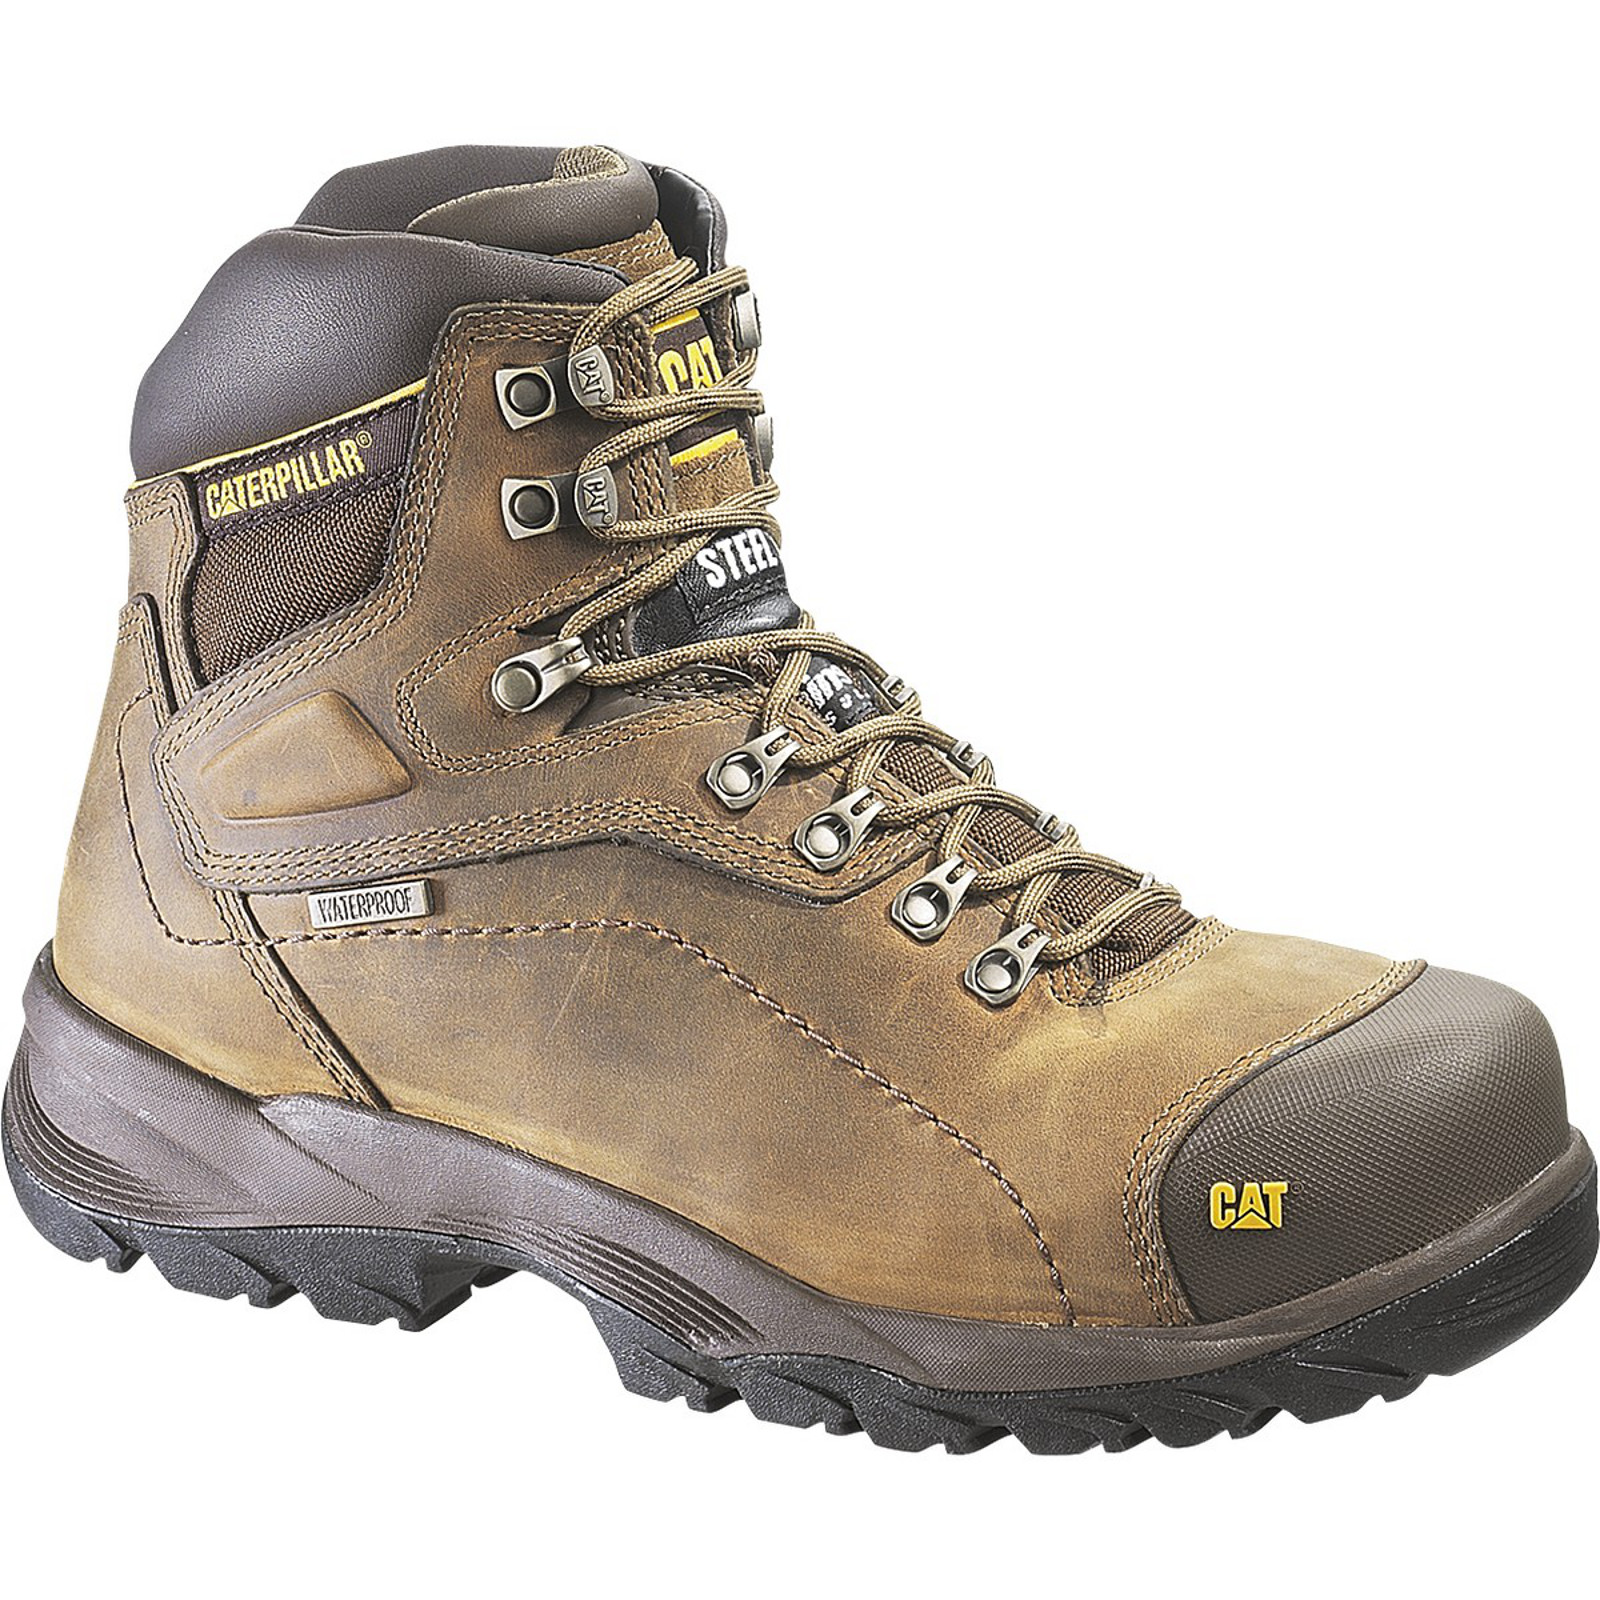 Cat Footwear Men's Diagnostic Leather Waterproof Steel Toe EH Work Boot #89940 Wide Width Available - Brown